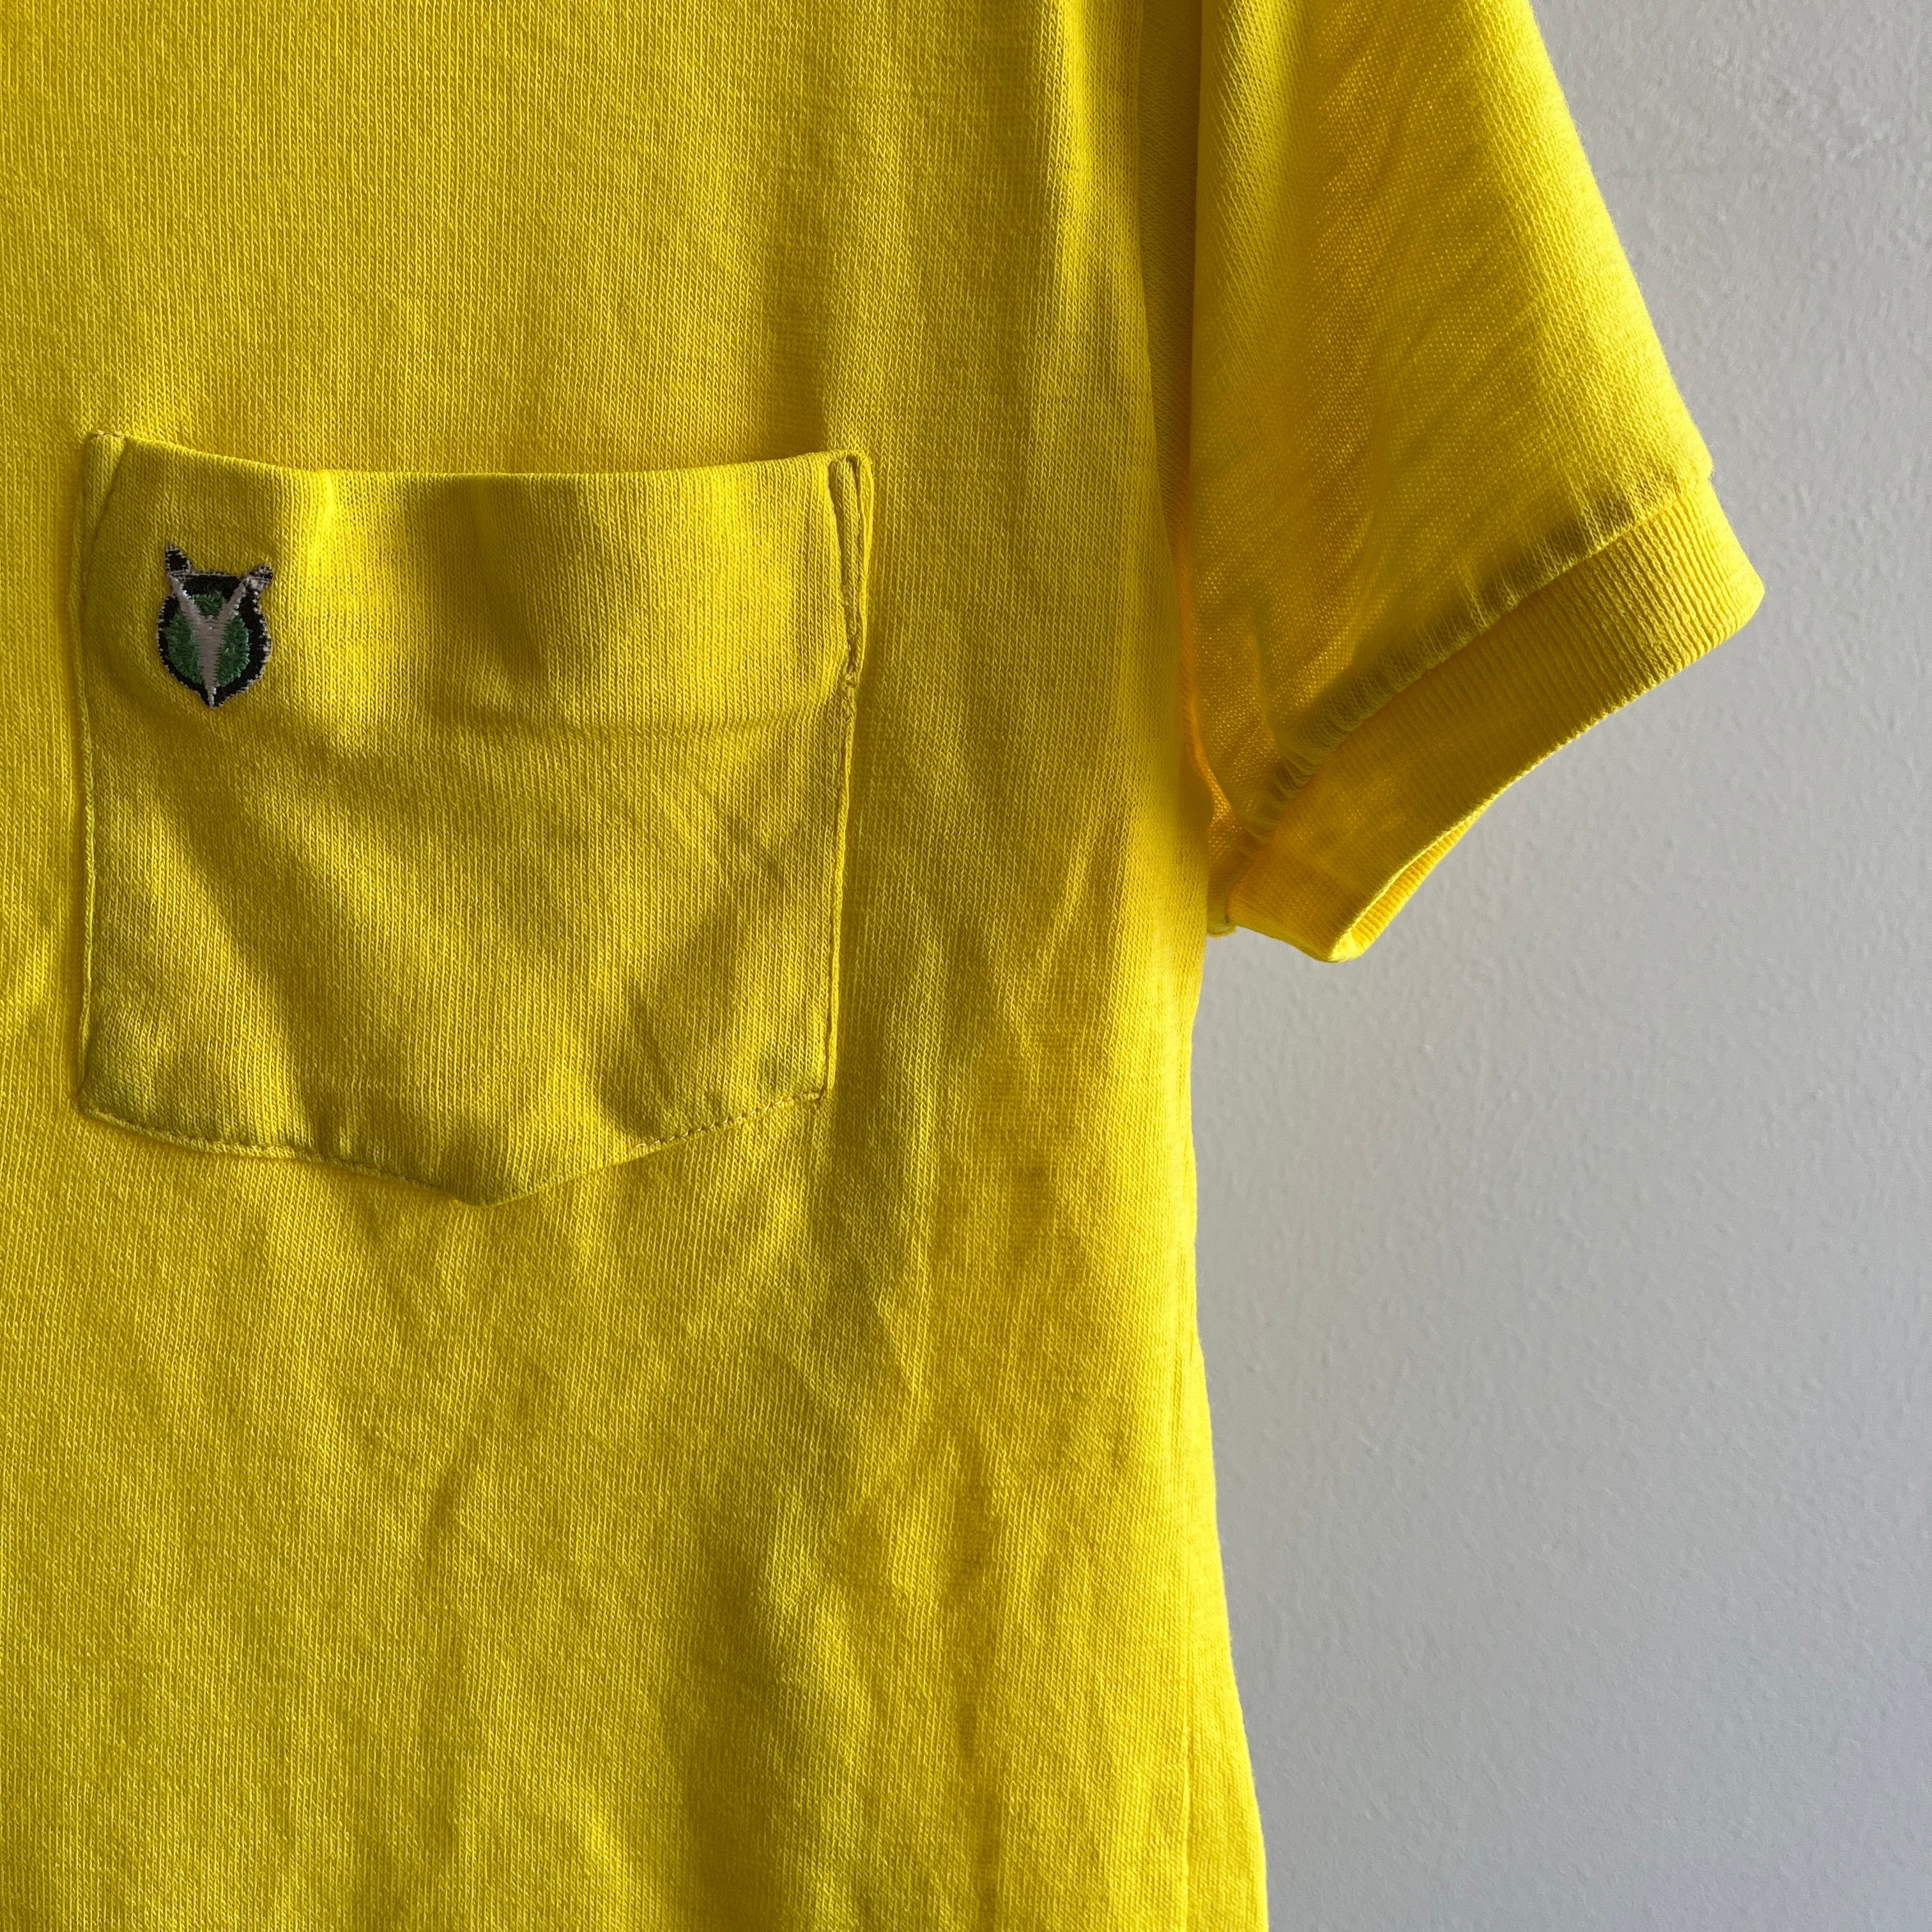 1980s Vibrant Yellow Polo T-Shirt - SO SOFT!